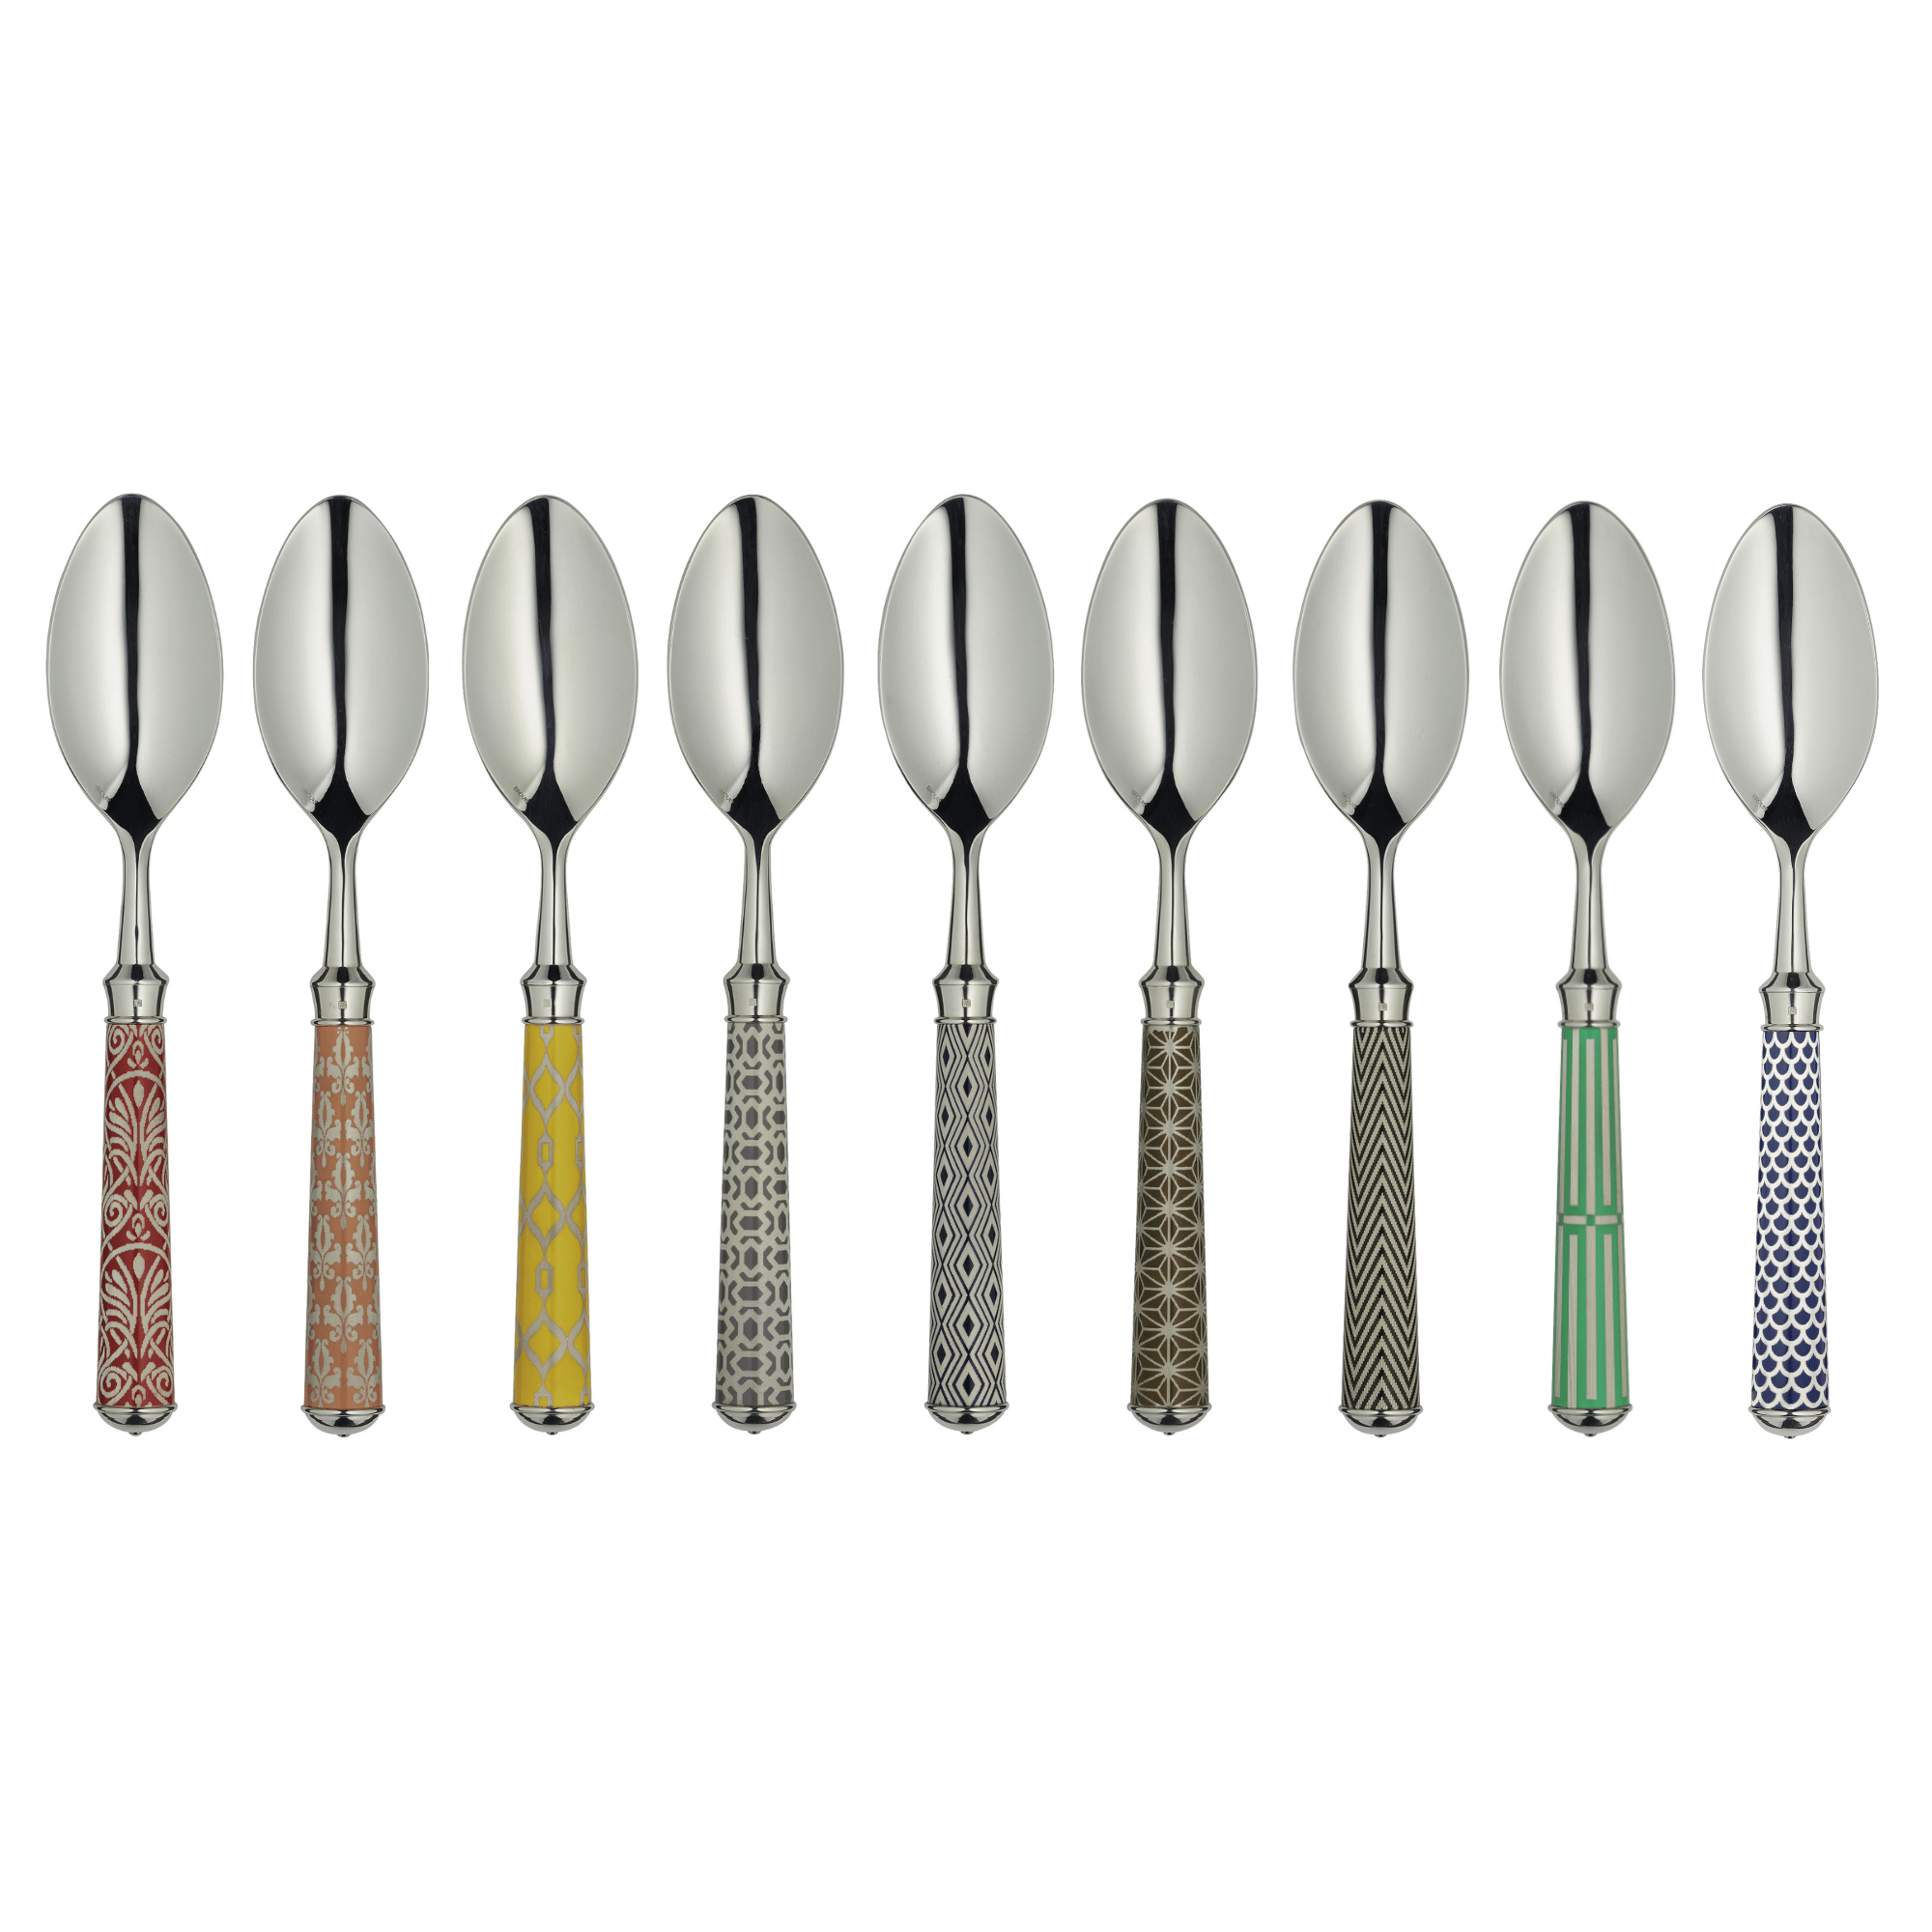 Ercuis decorative arts bespoke cutlery